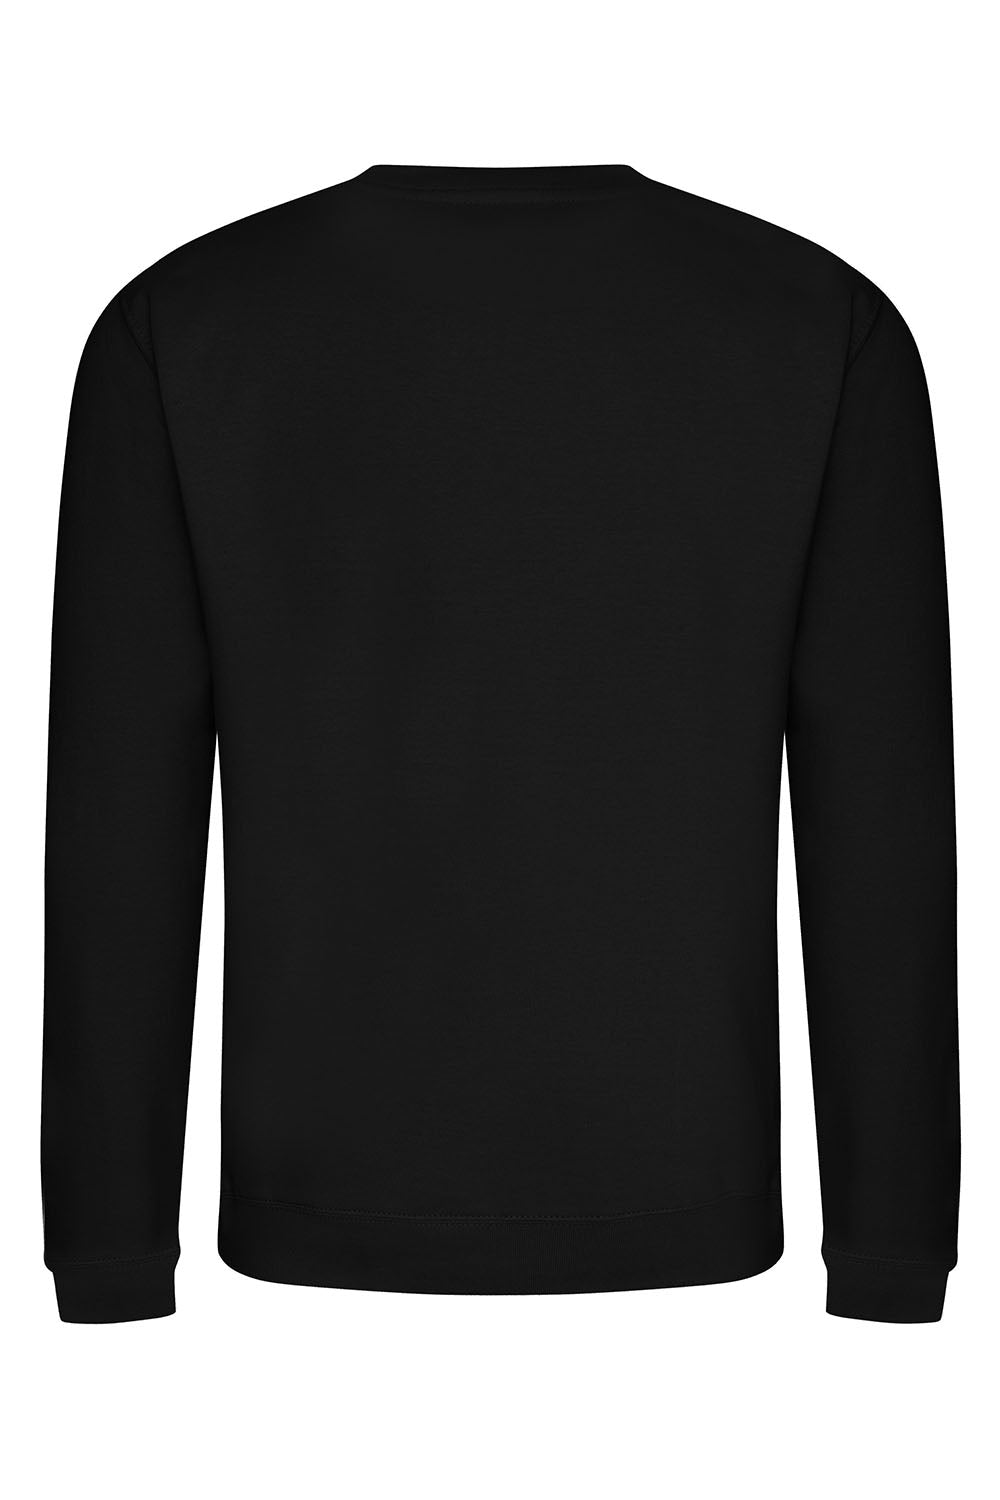 Sakura Sweatshirt In Black (Custom Pack)